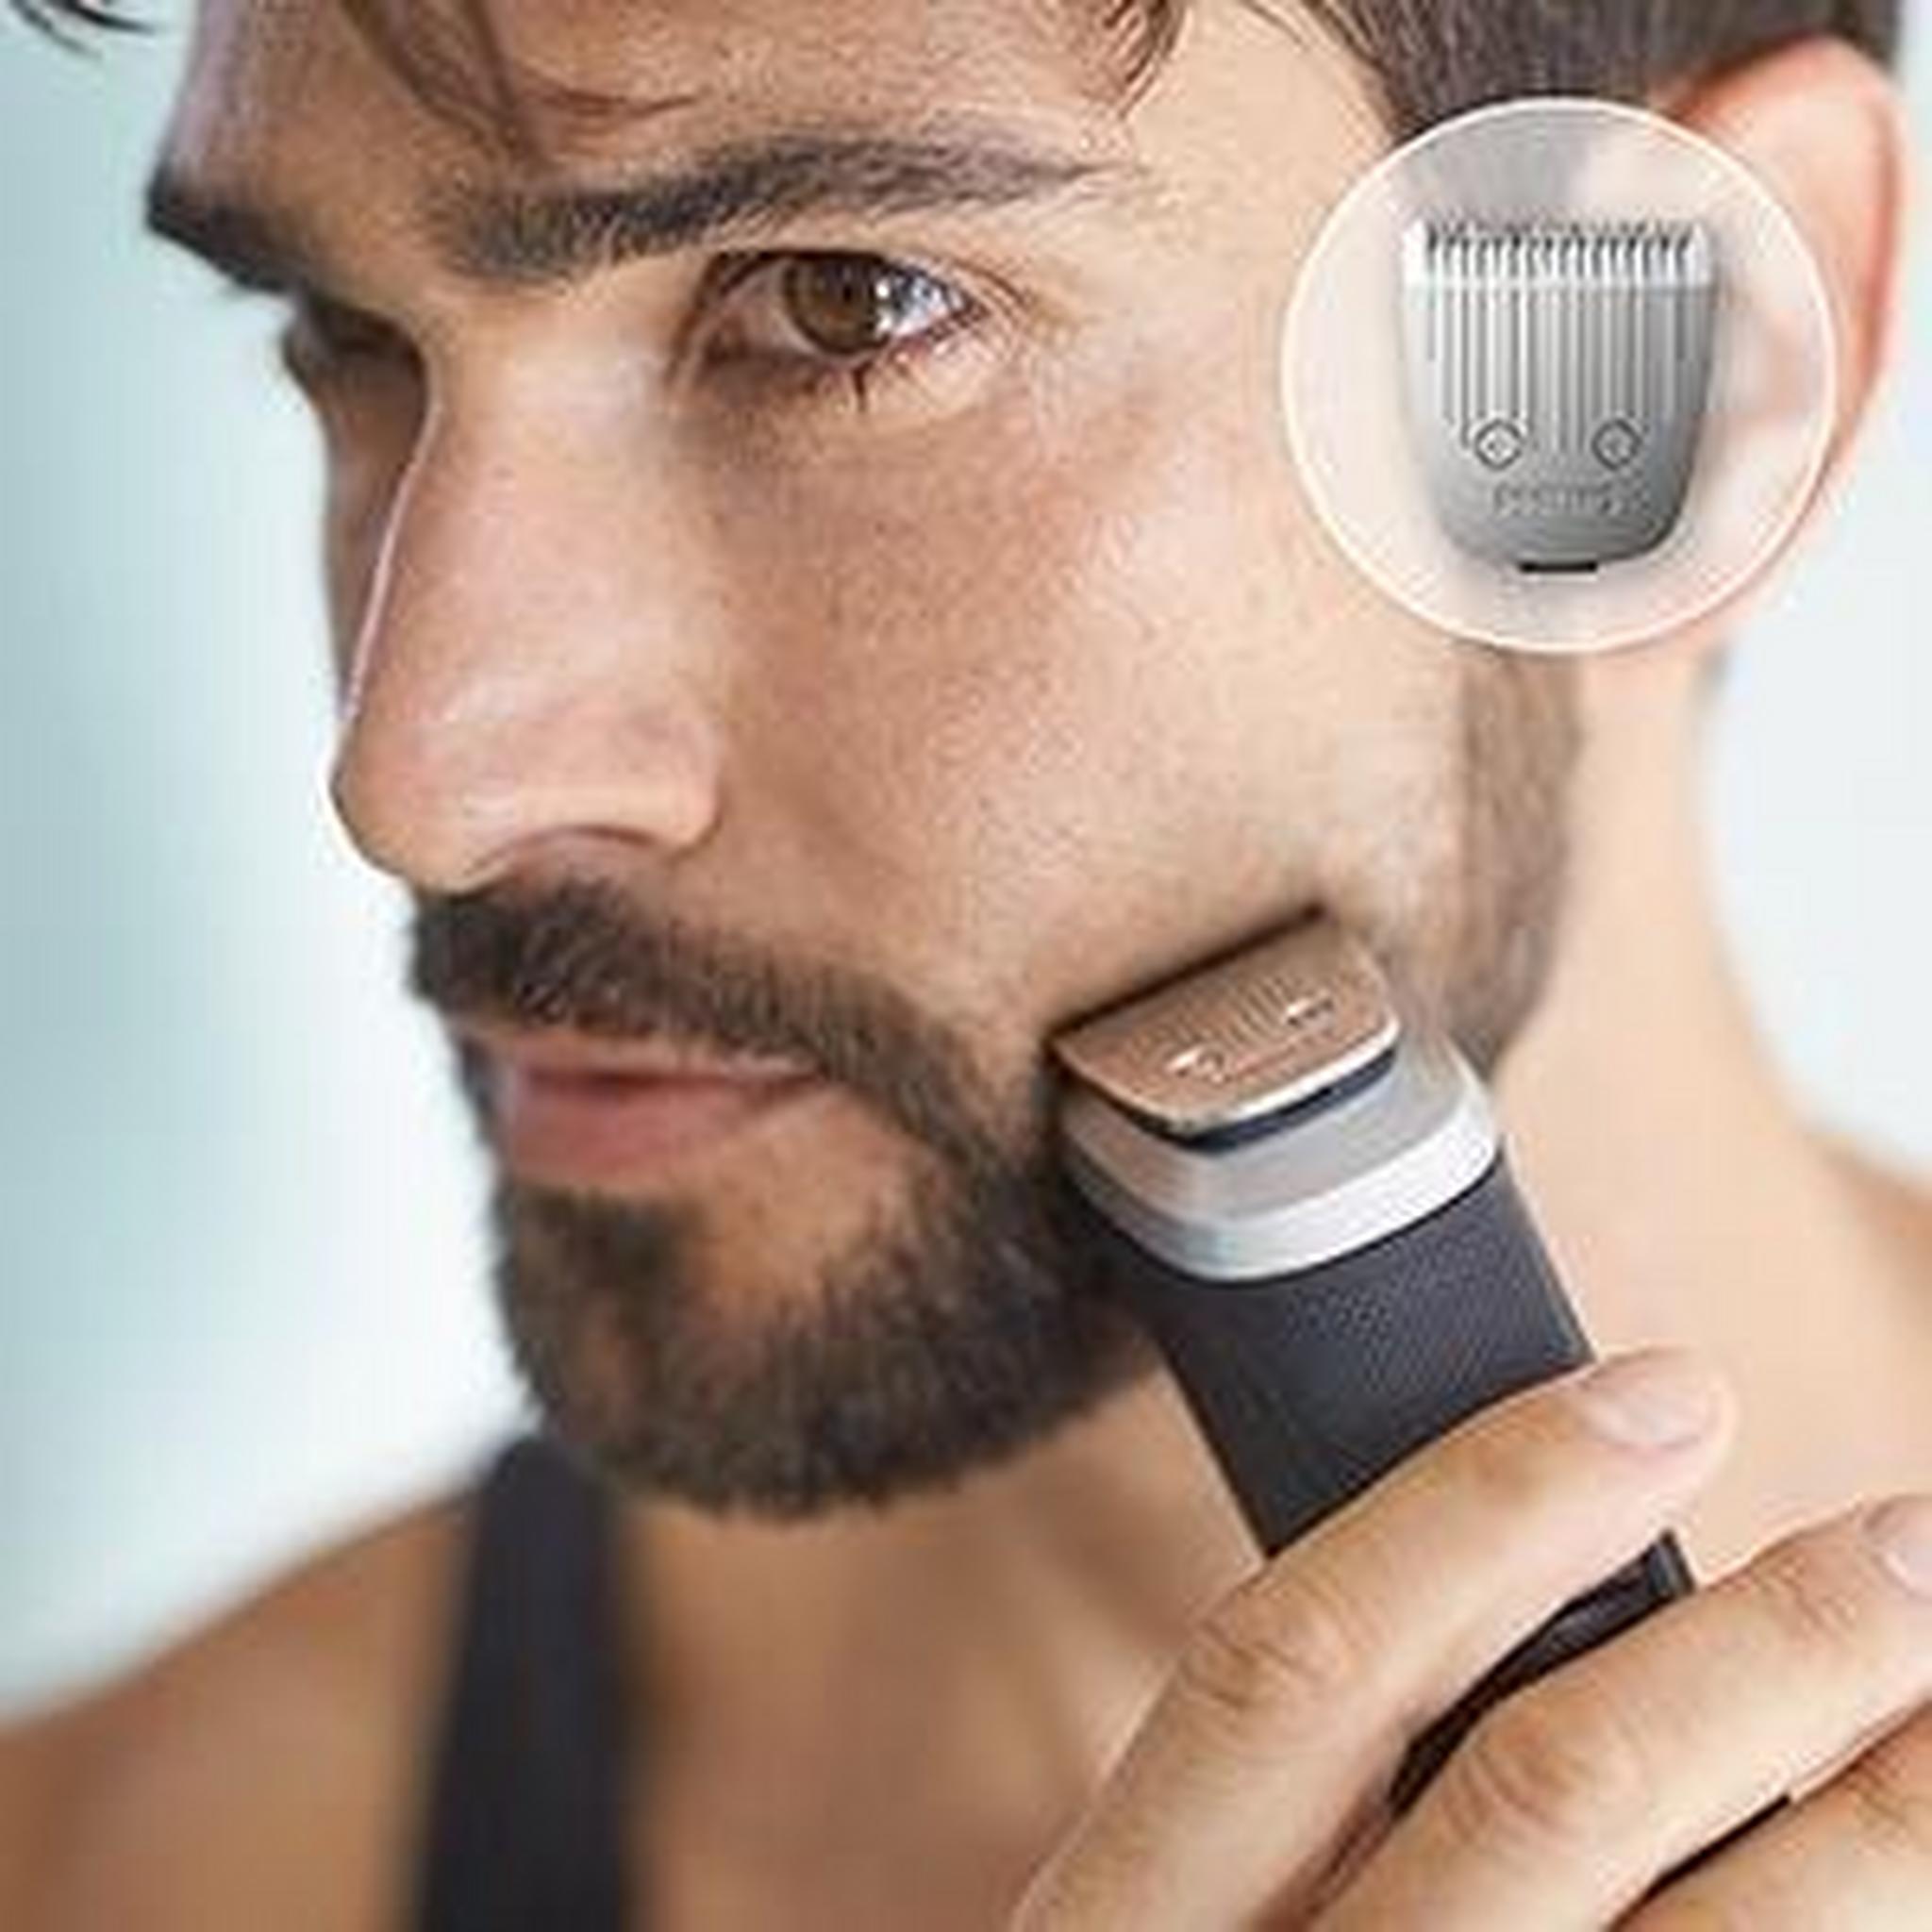 Philips Multigroom Series 5000- 11-in-1 Grooming Kit for Face, Beard & Body, S3122/50 - Black